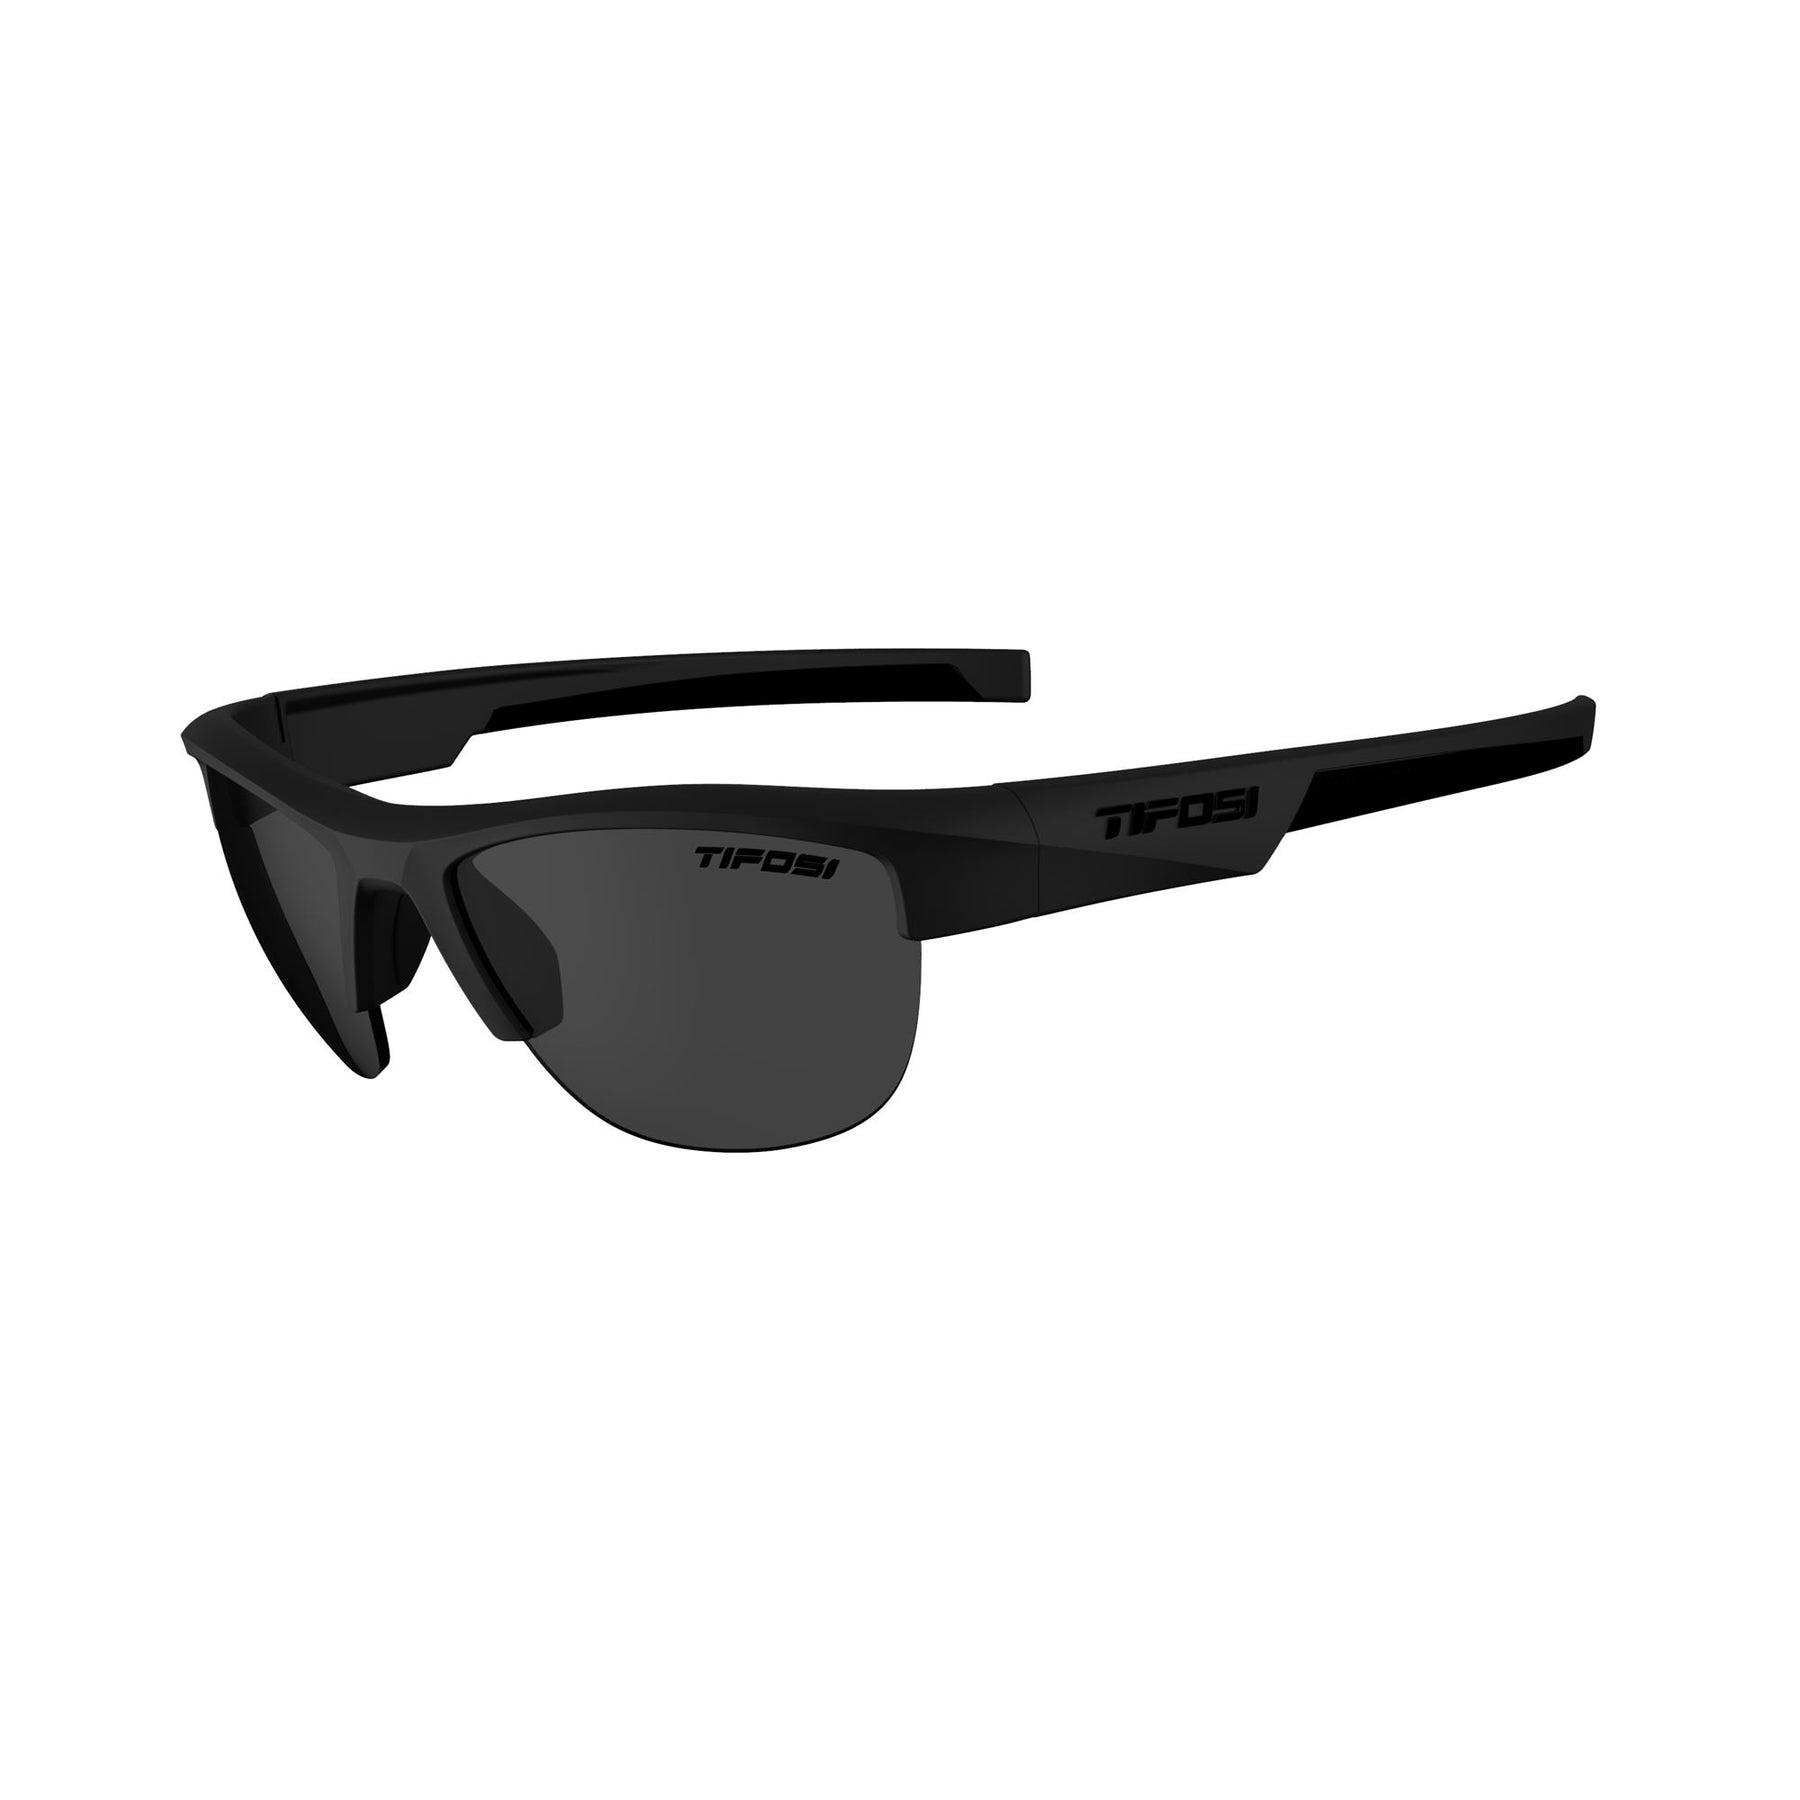 Tifosi Strikeout Single Lens Sunglasses Blackout